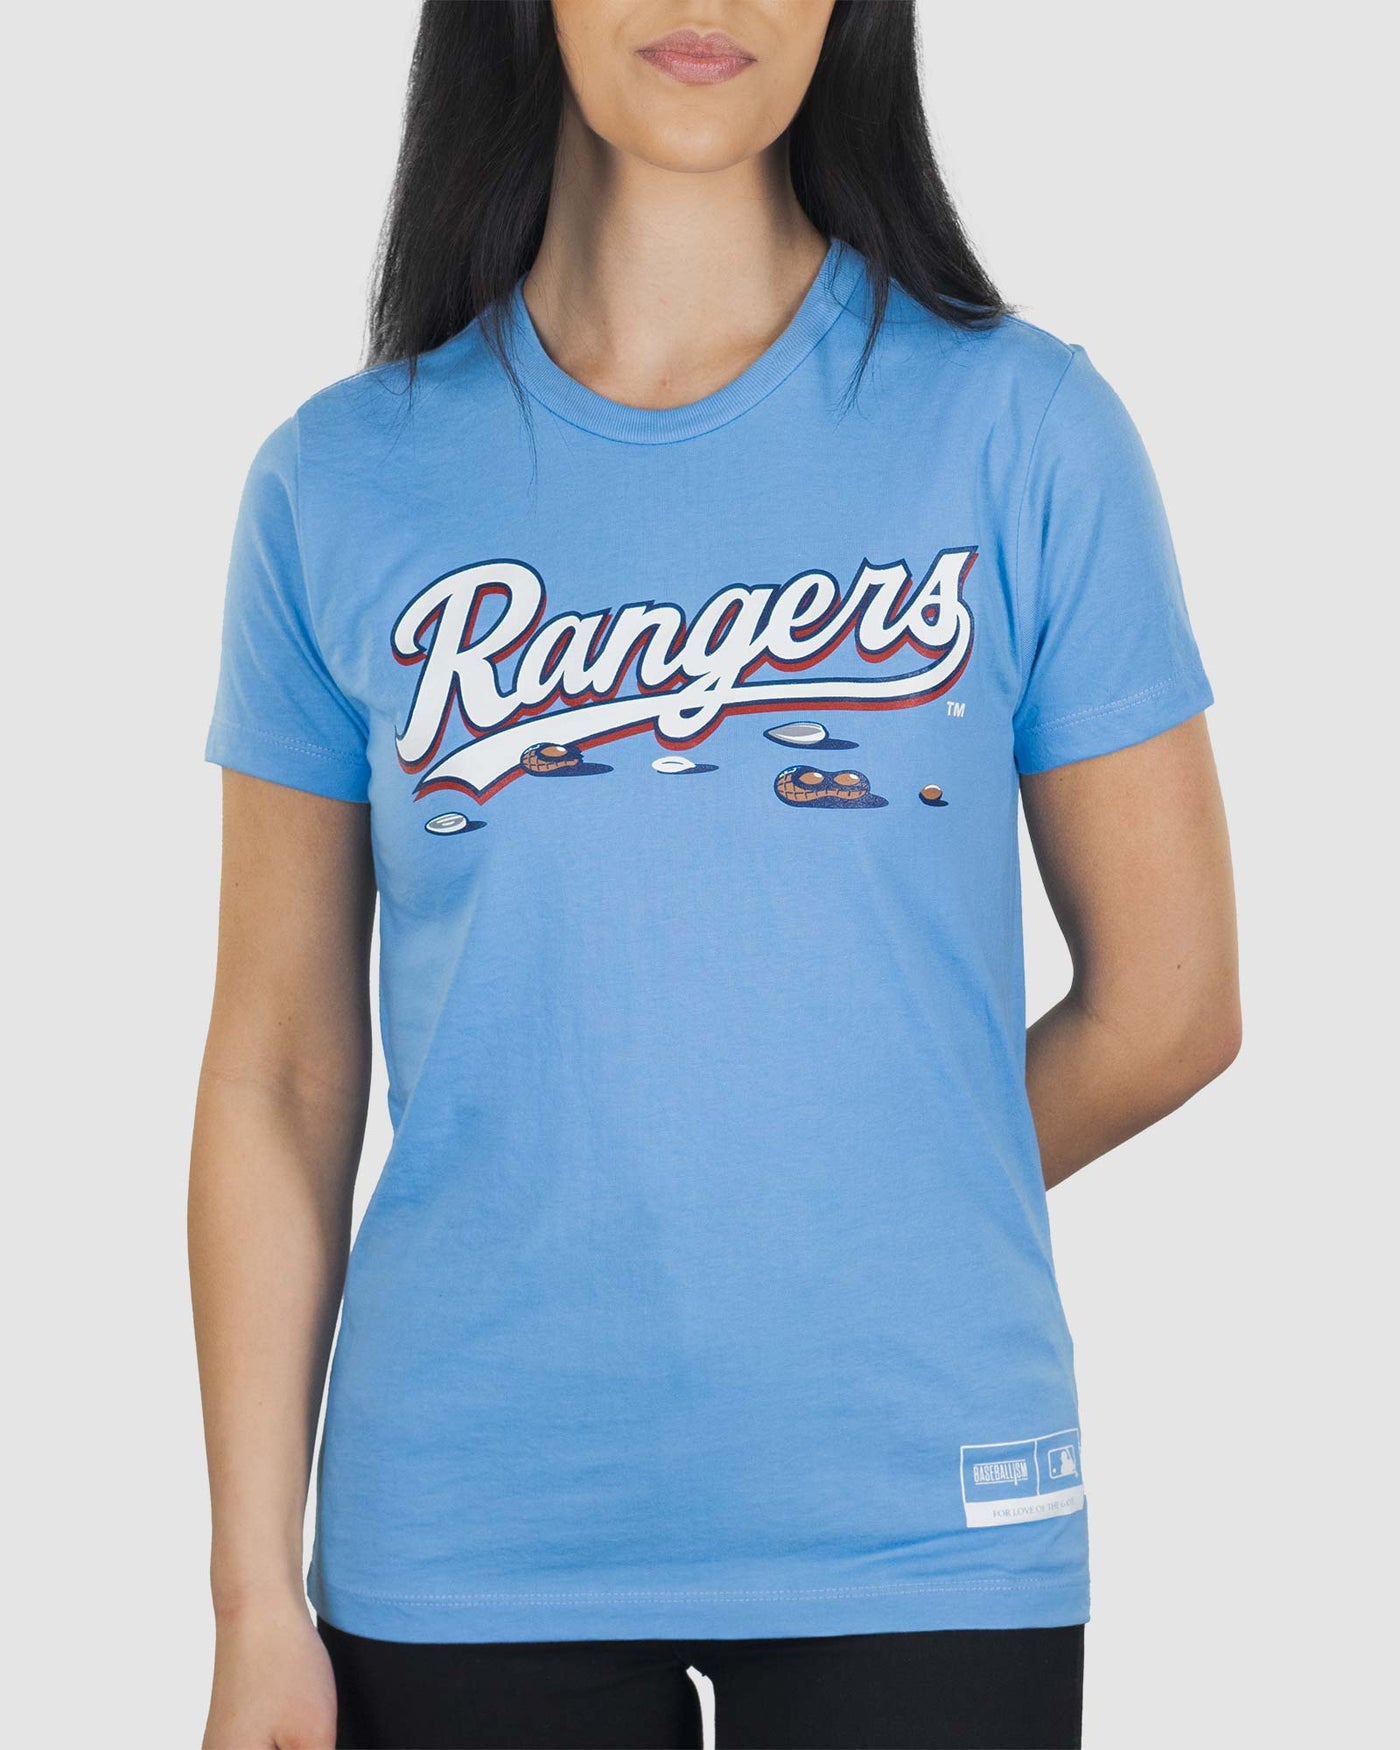 Get Your Peanuts! Women's Warm-Up Tee - Texas Rangers